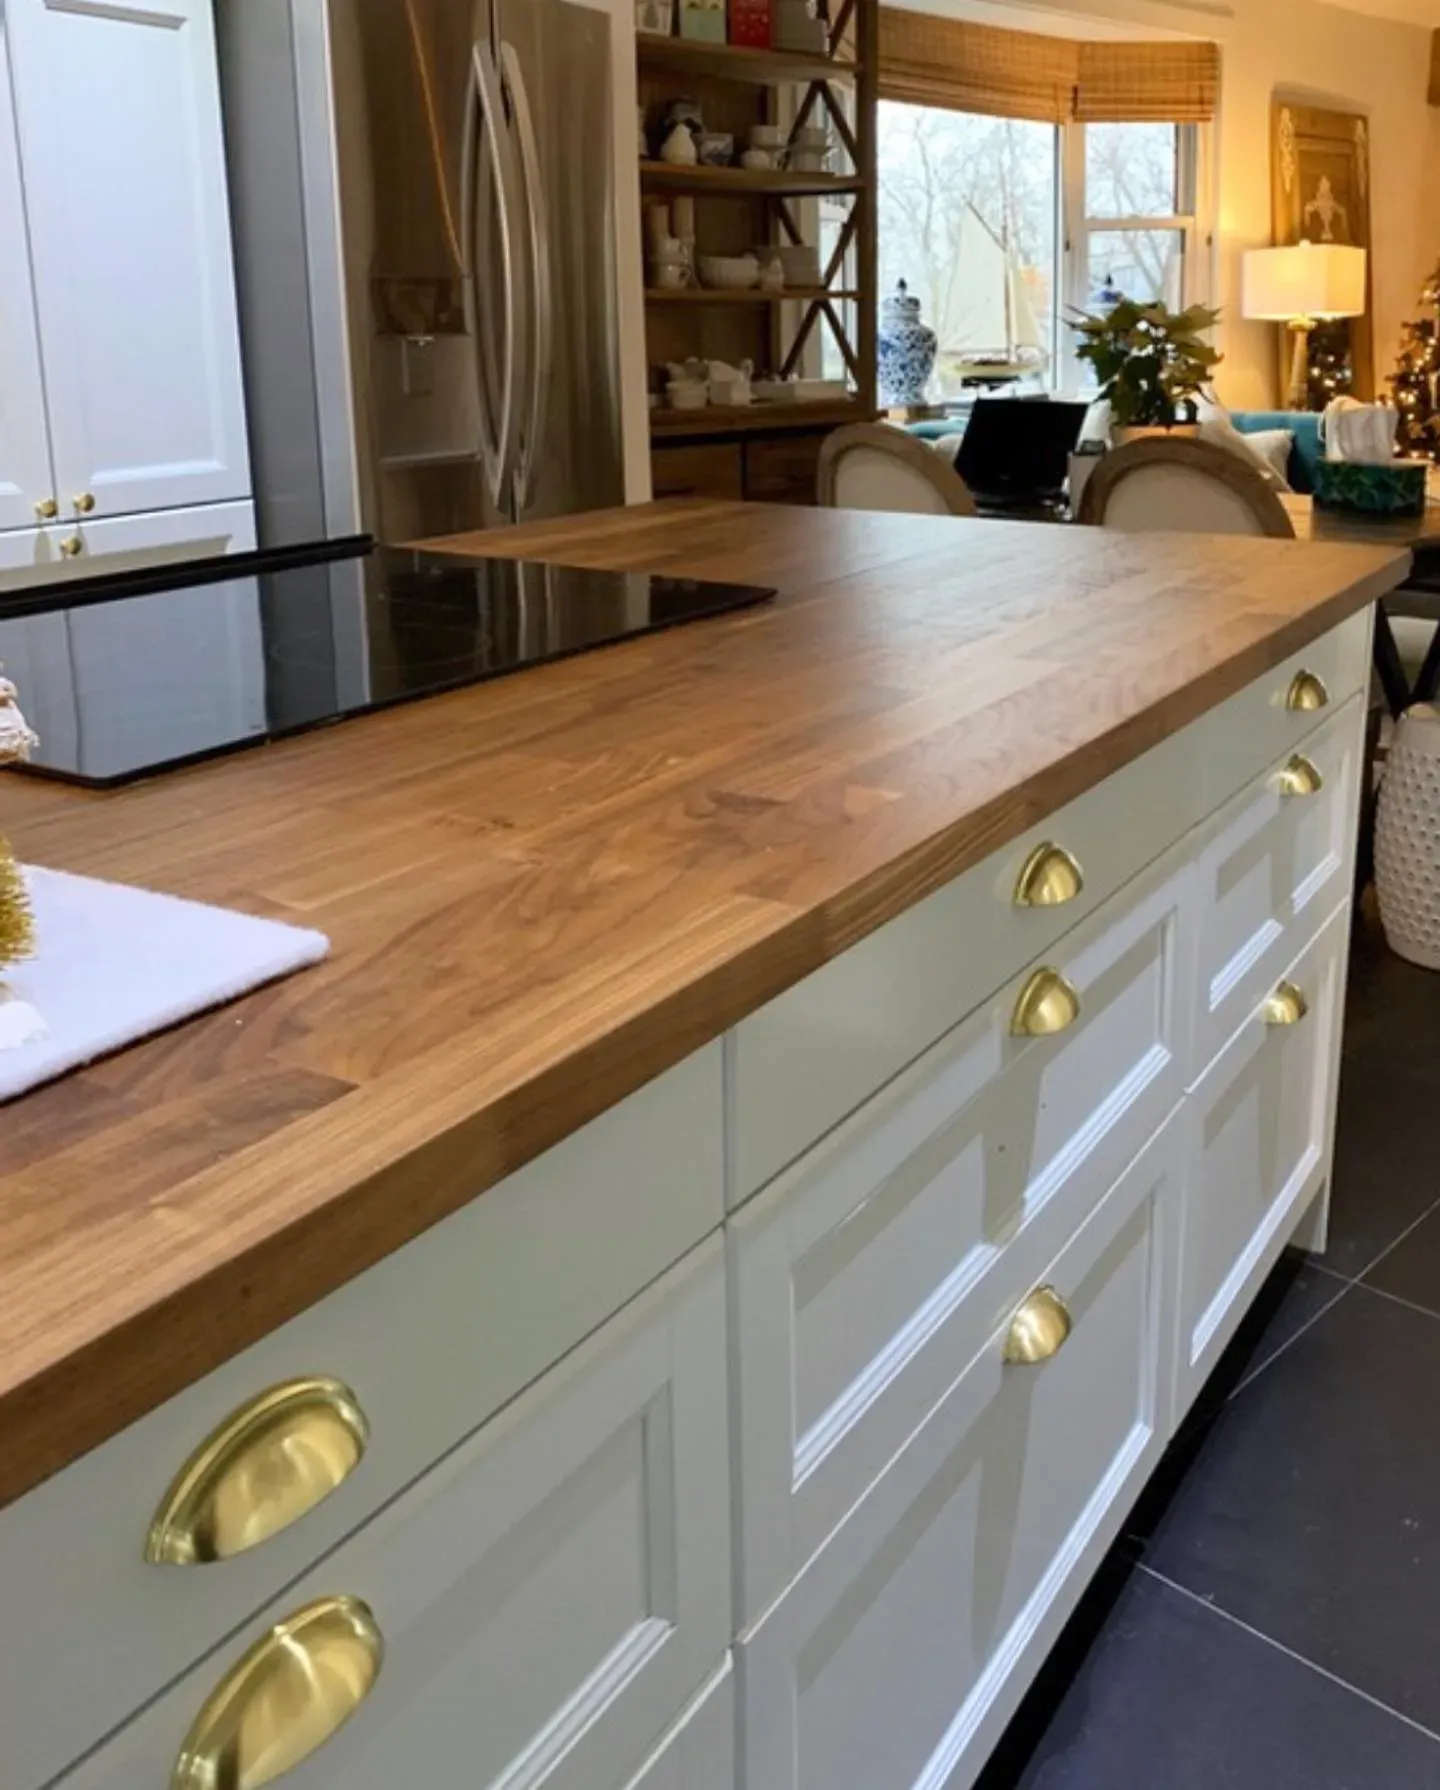 Benjamin Moore Ocean Air kitchen cabinets review